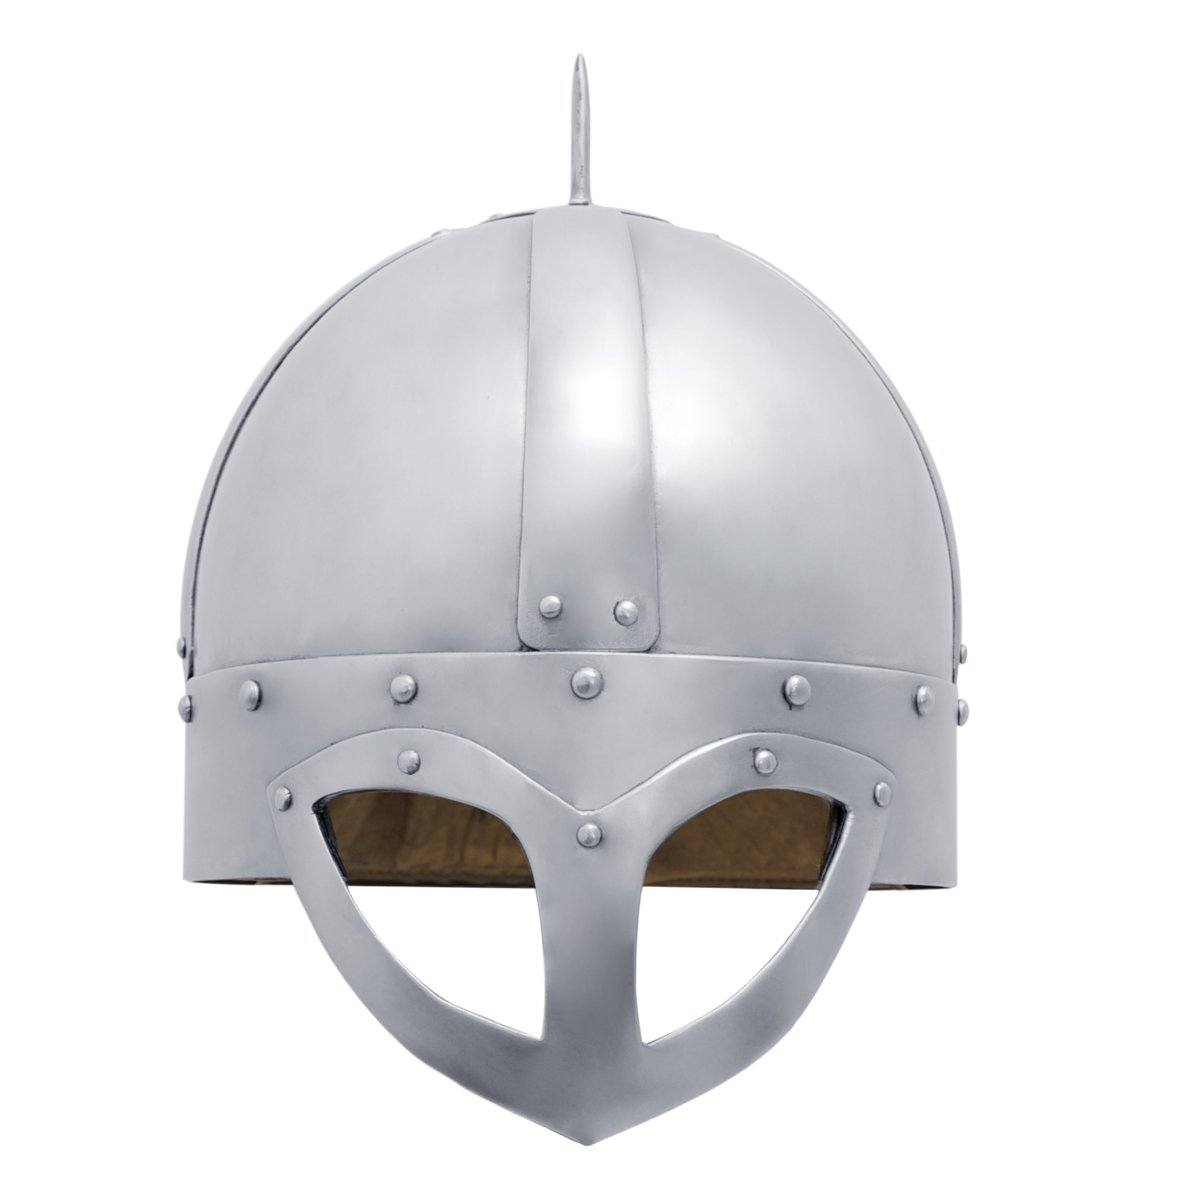 The Gjermundbu helmet, Size XL